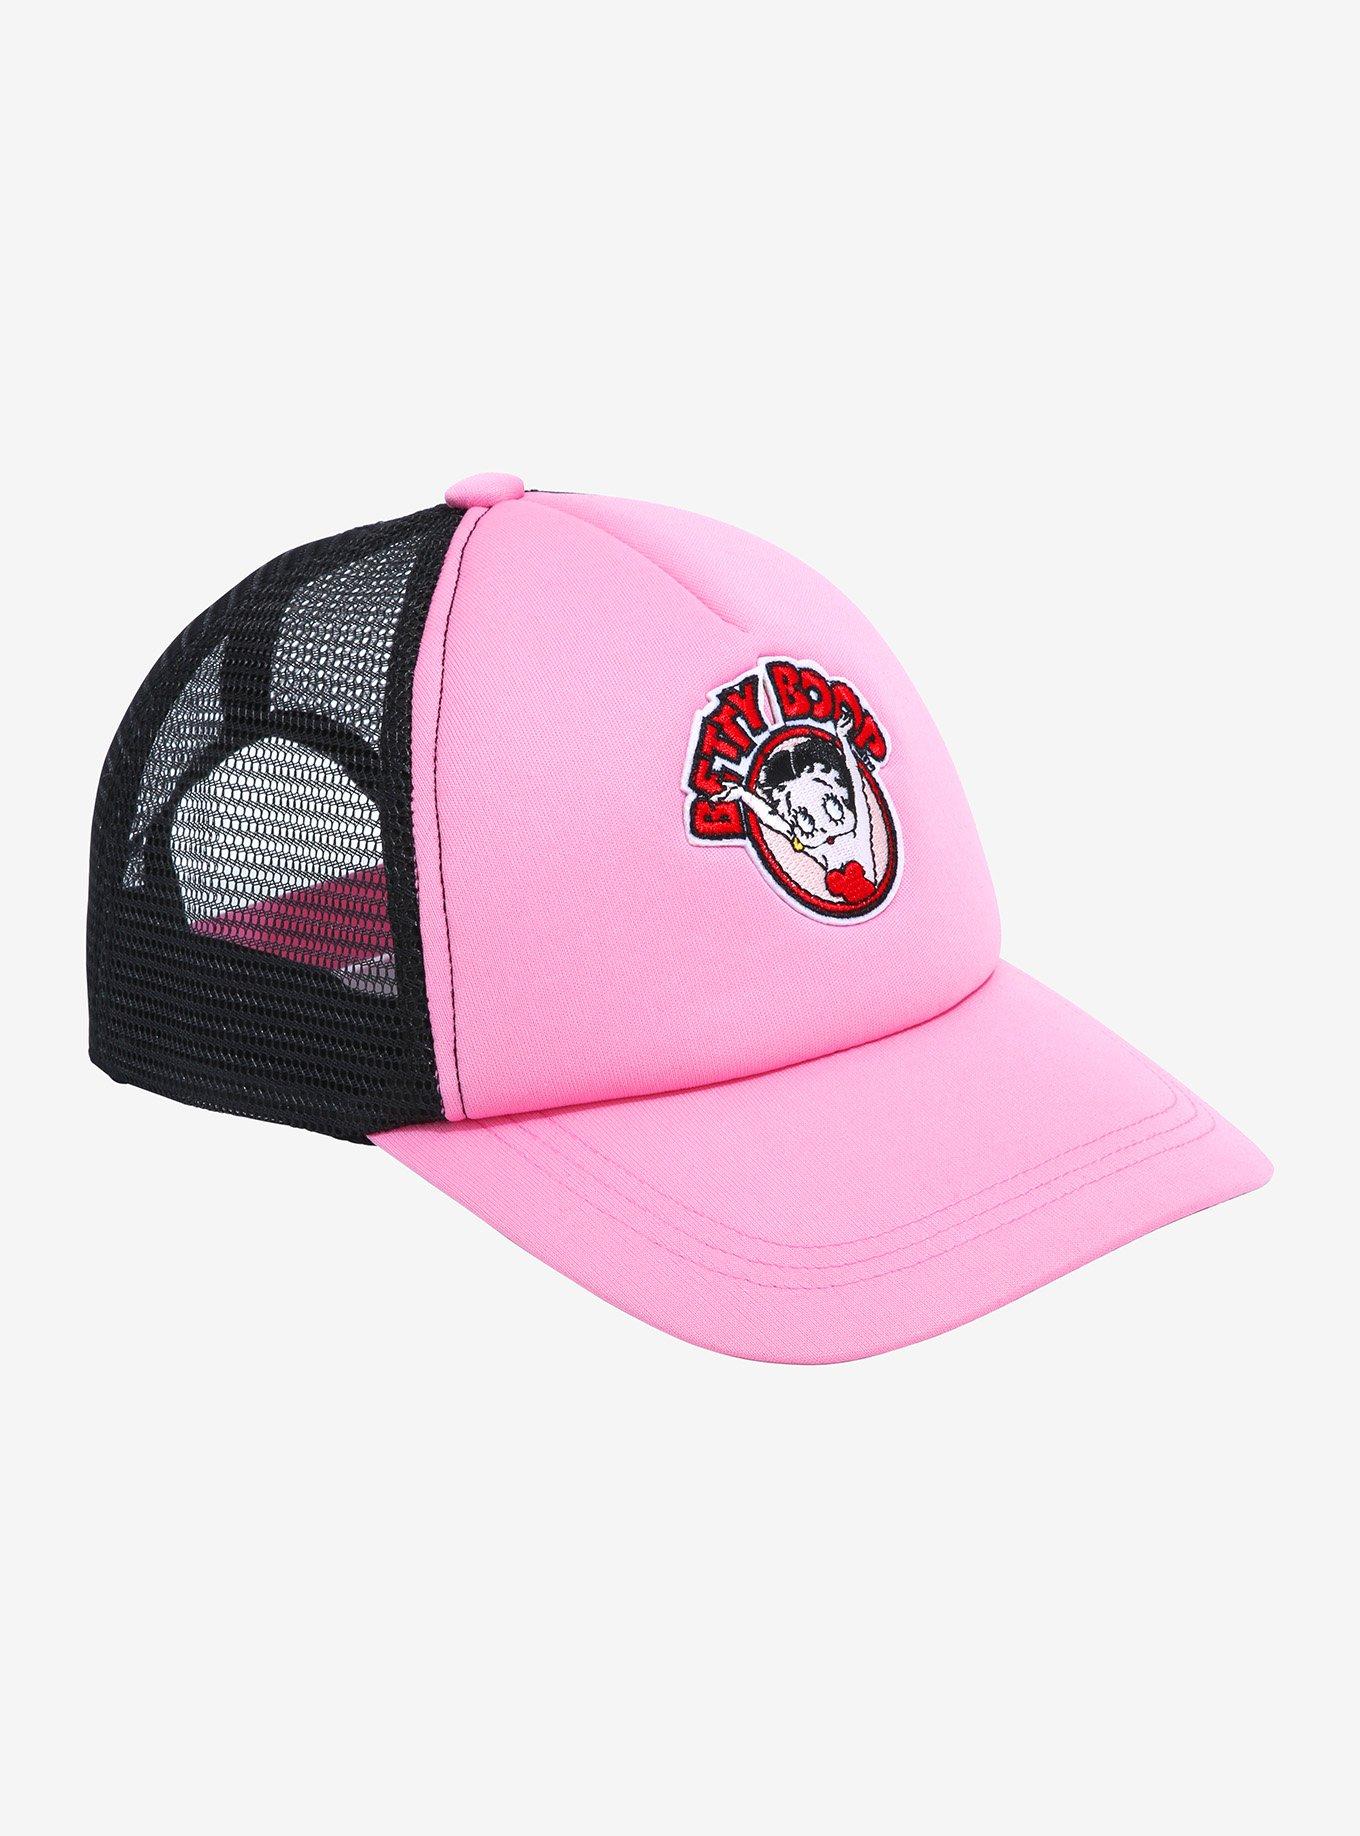 Betty Boop Pink Trucker Hat | Hot Topic